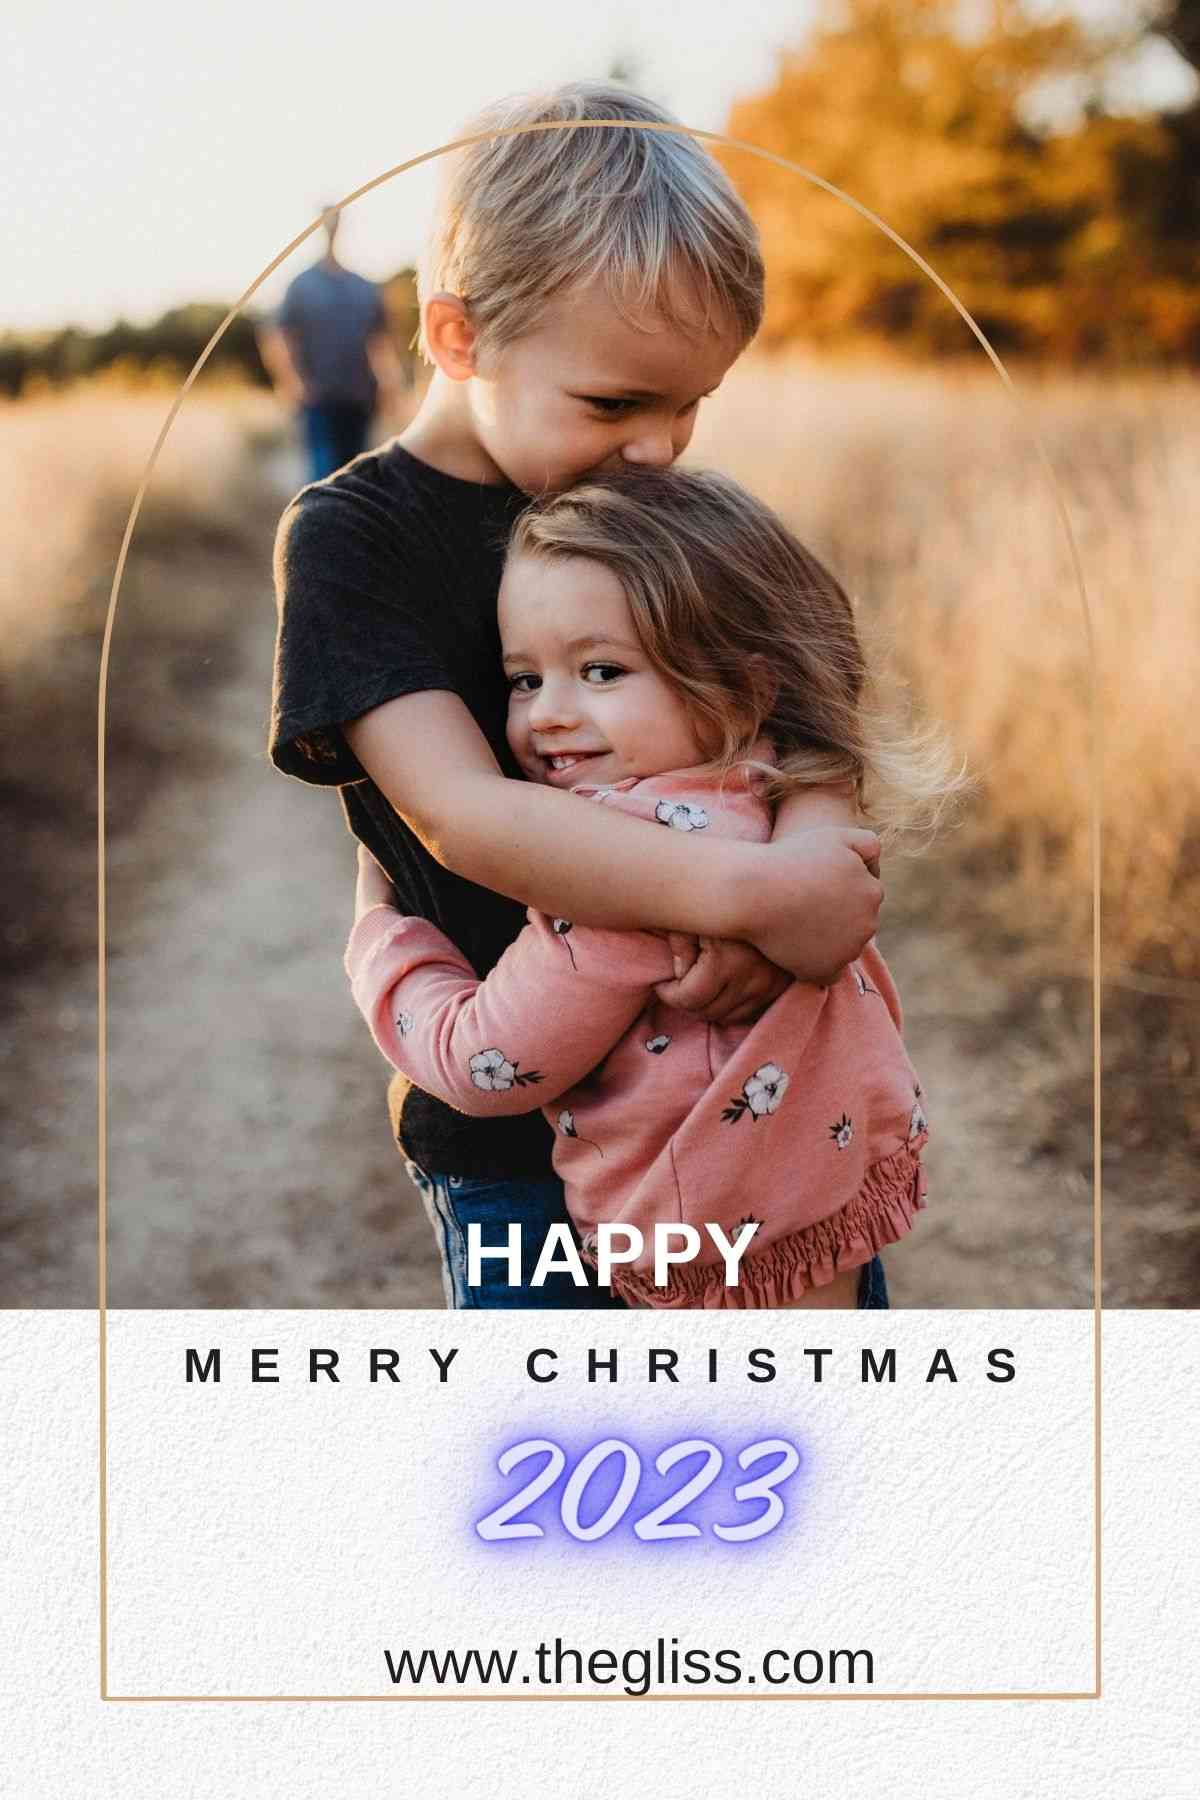 Family-Centric Christmas Cards